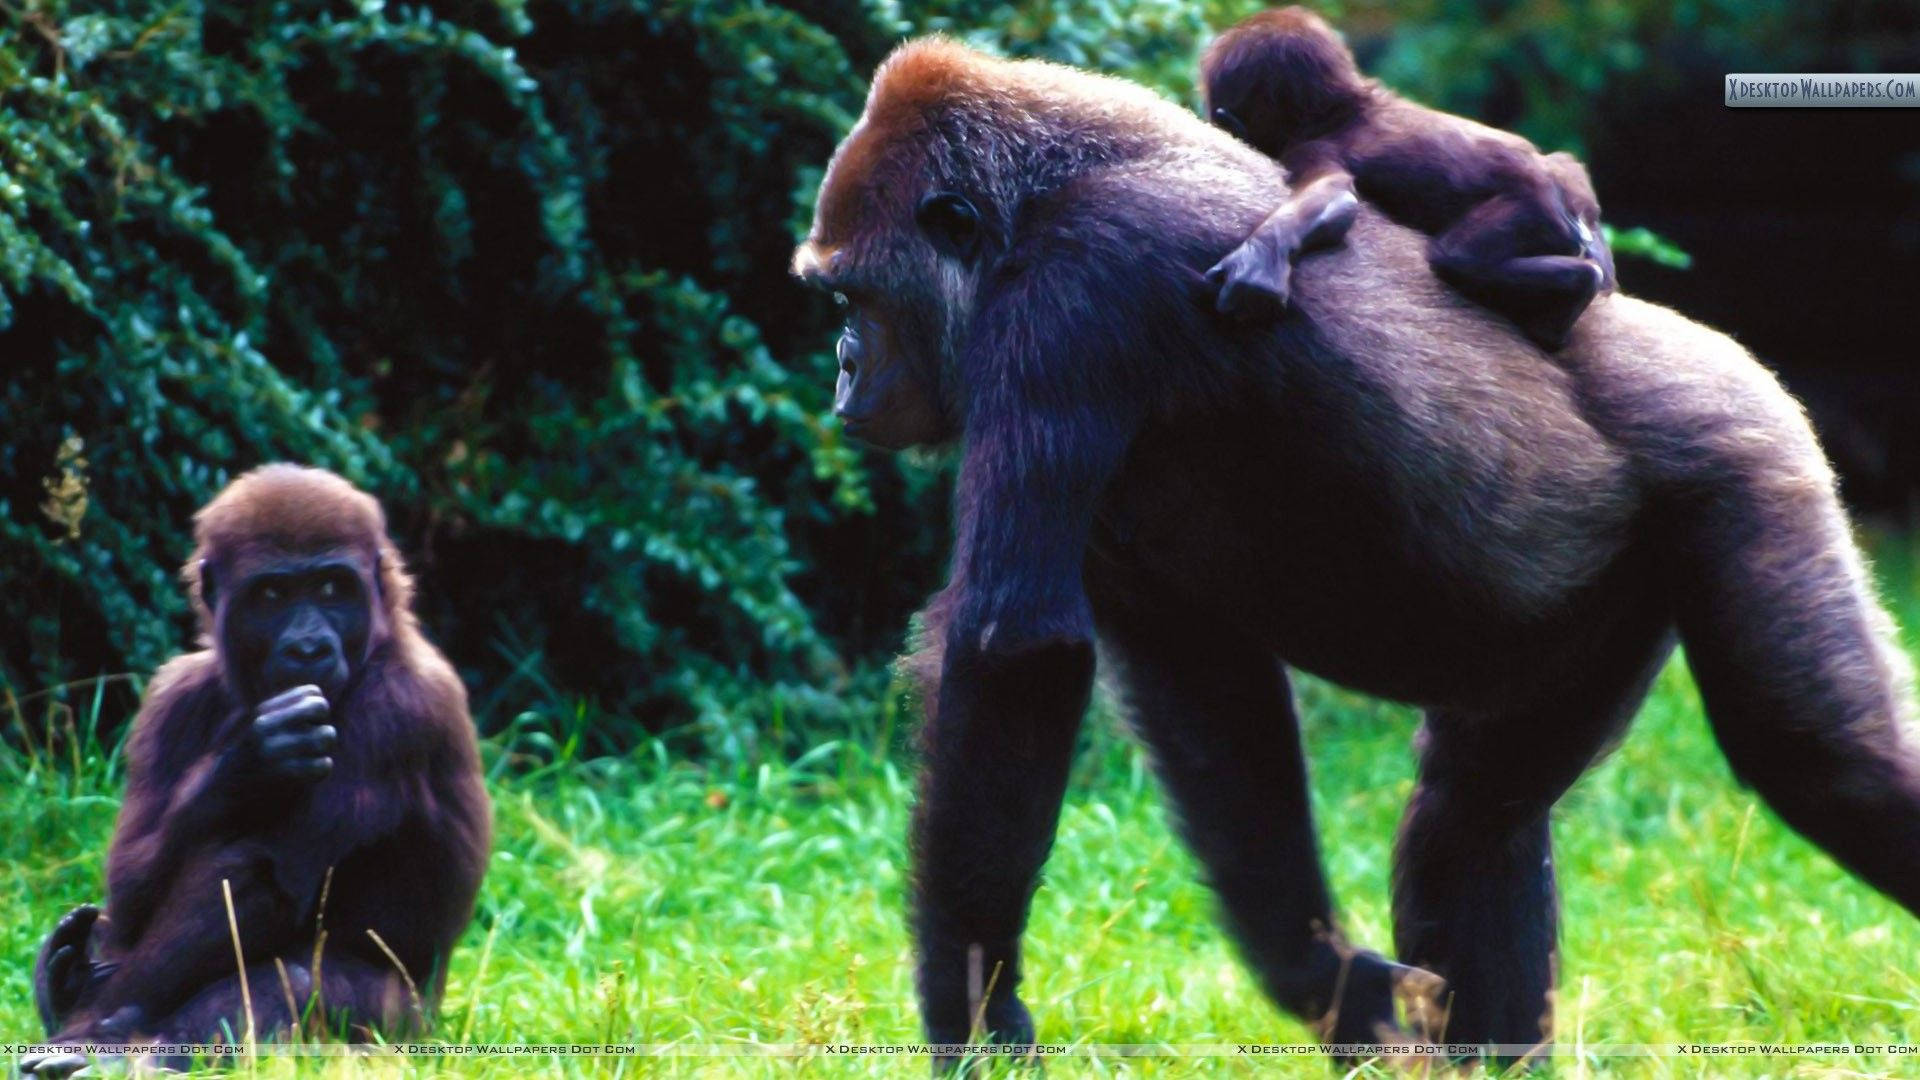 Mother Gorilla Carrying Baby Gorilla Background